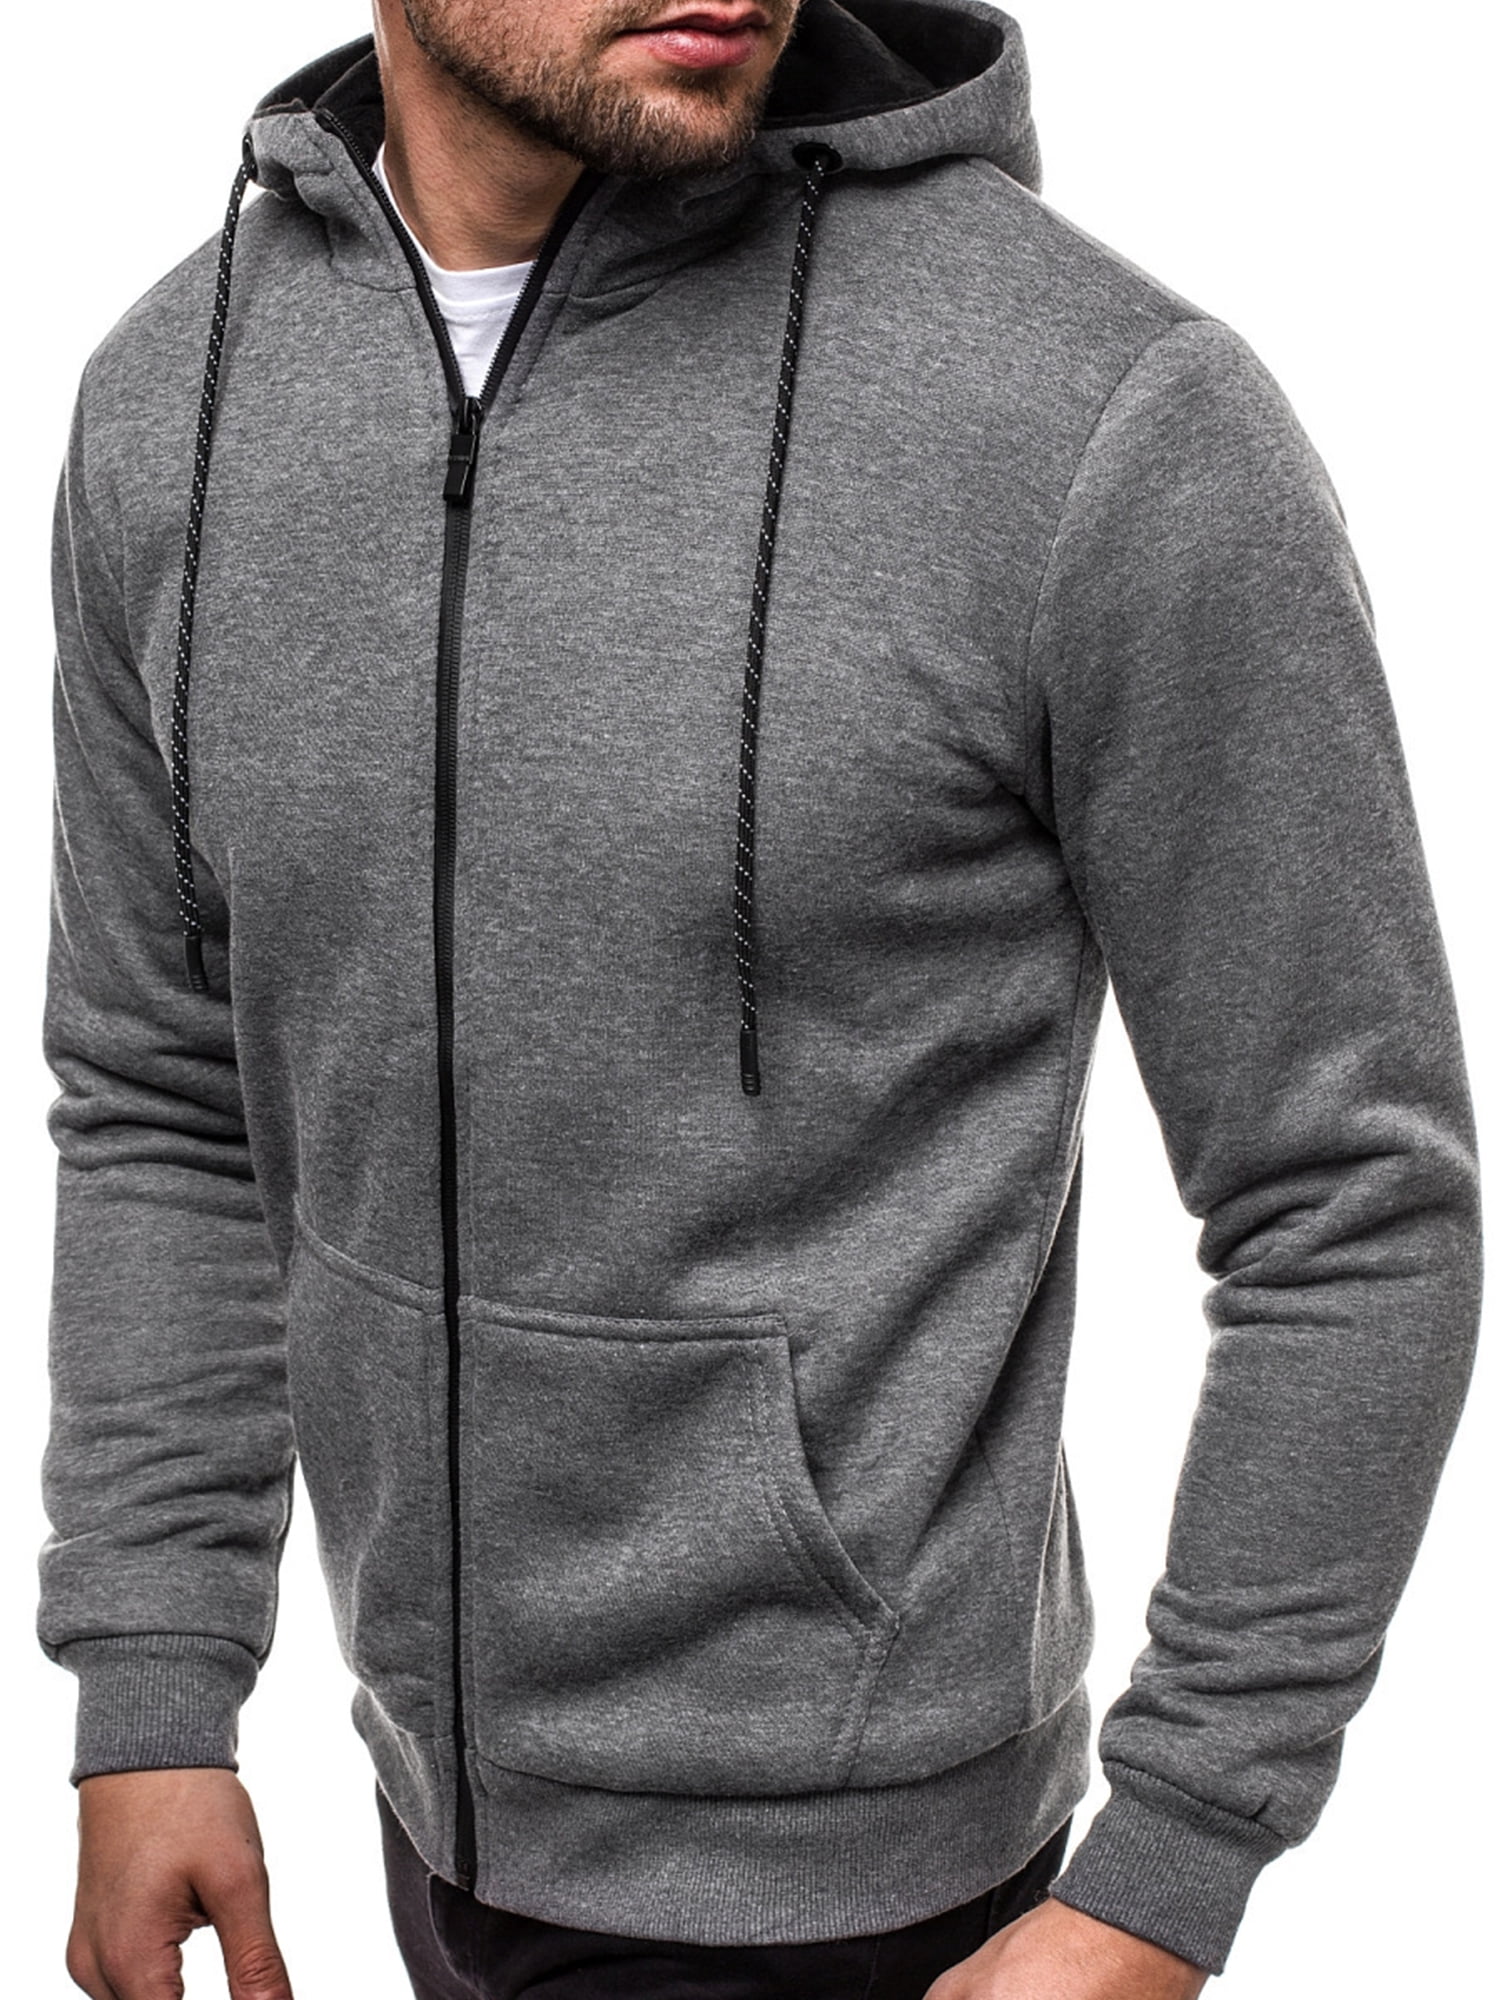 Hoody Tops Solid Sweatshirts Jacket Fashion Hoodie Fleeces Winter Sweater Men's